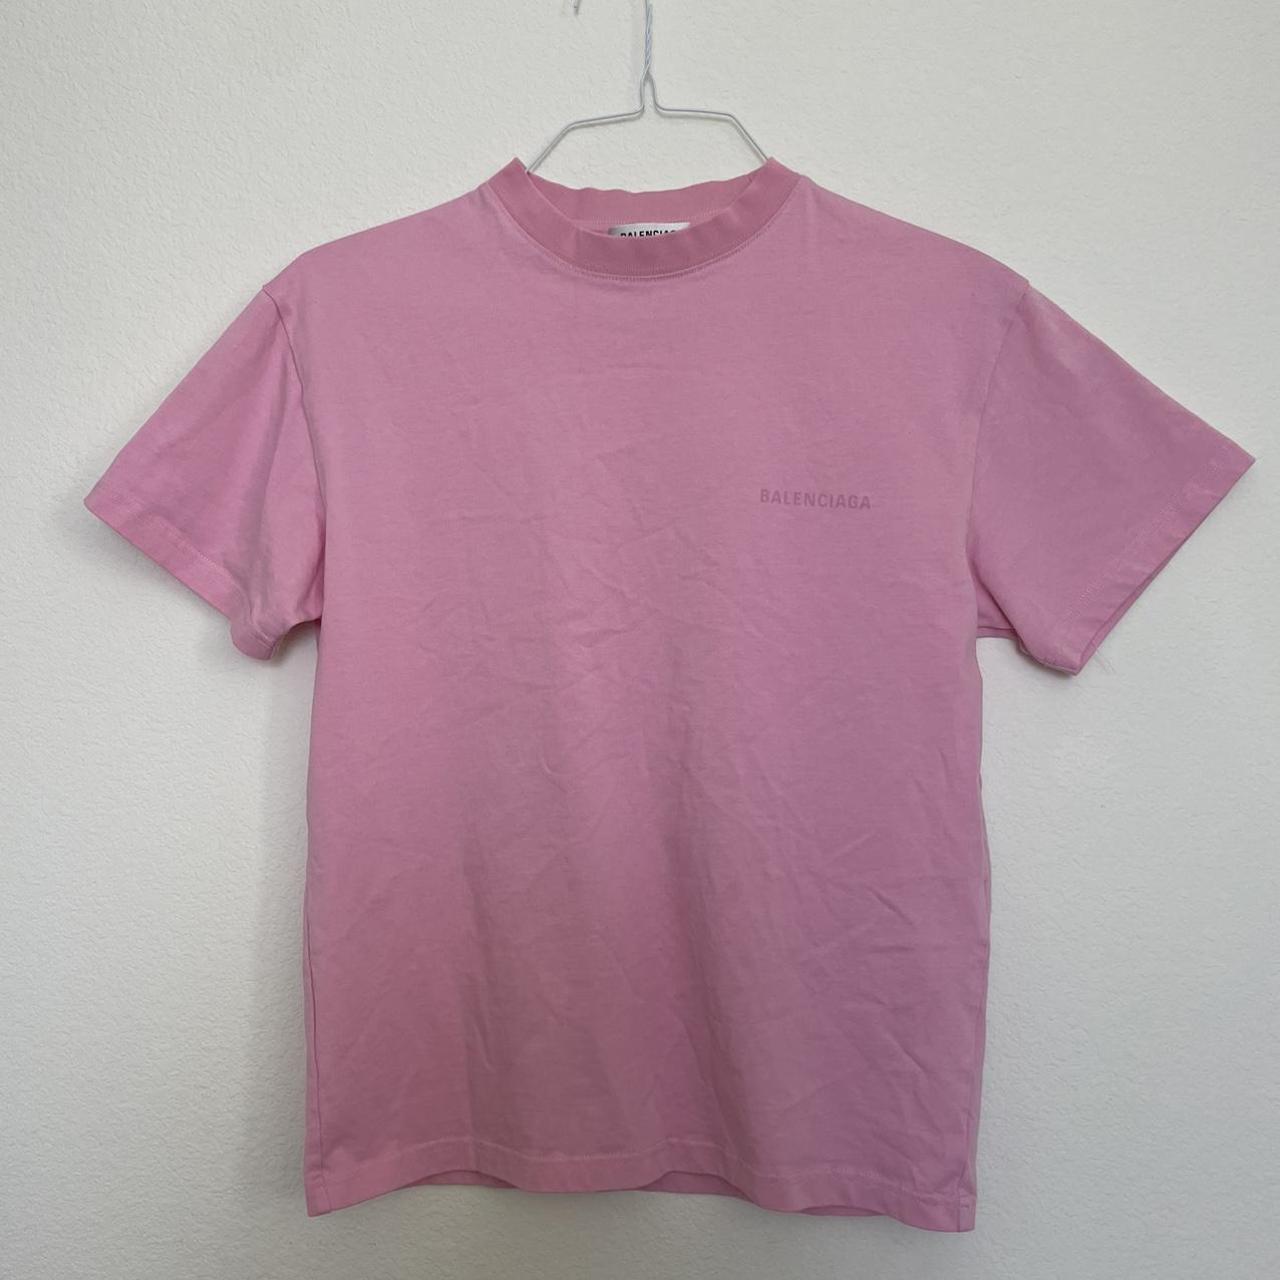 Product Image 2 - Authentic Balenciaga Pink Oversized T-Shirt

✓